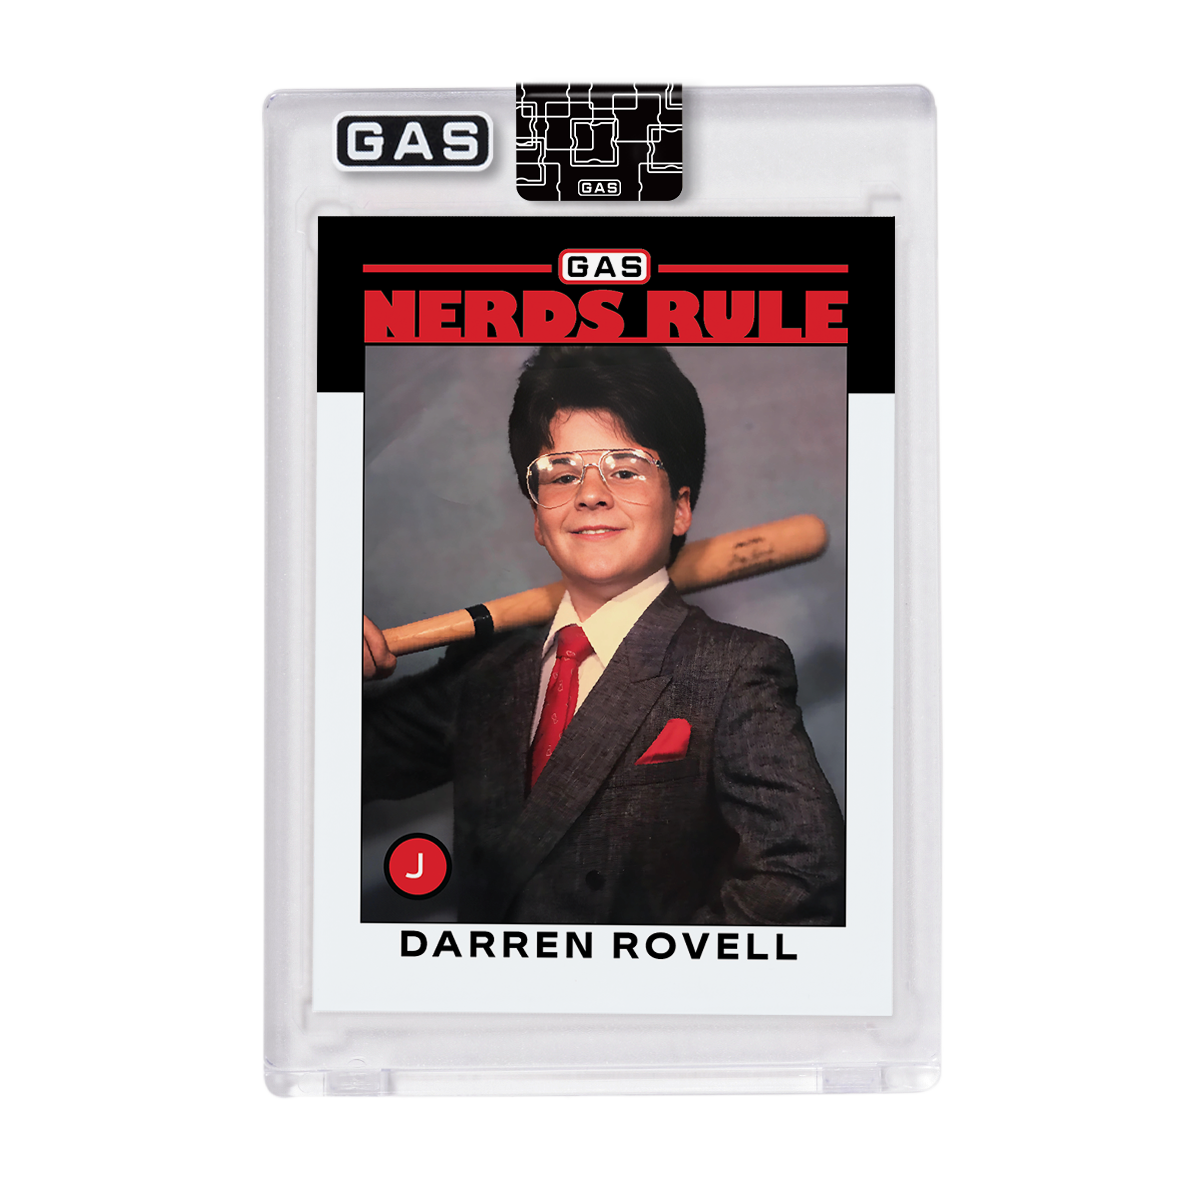 The Official Darren Rovell GAS Trading Card